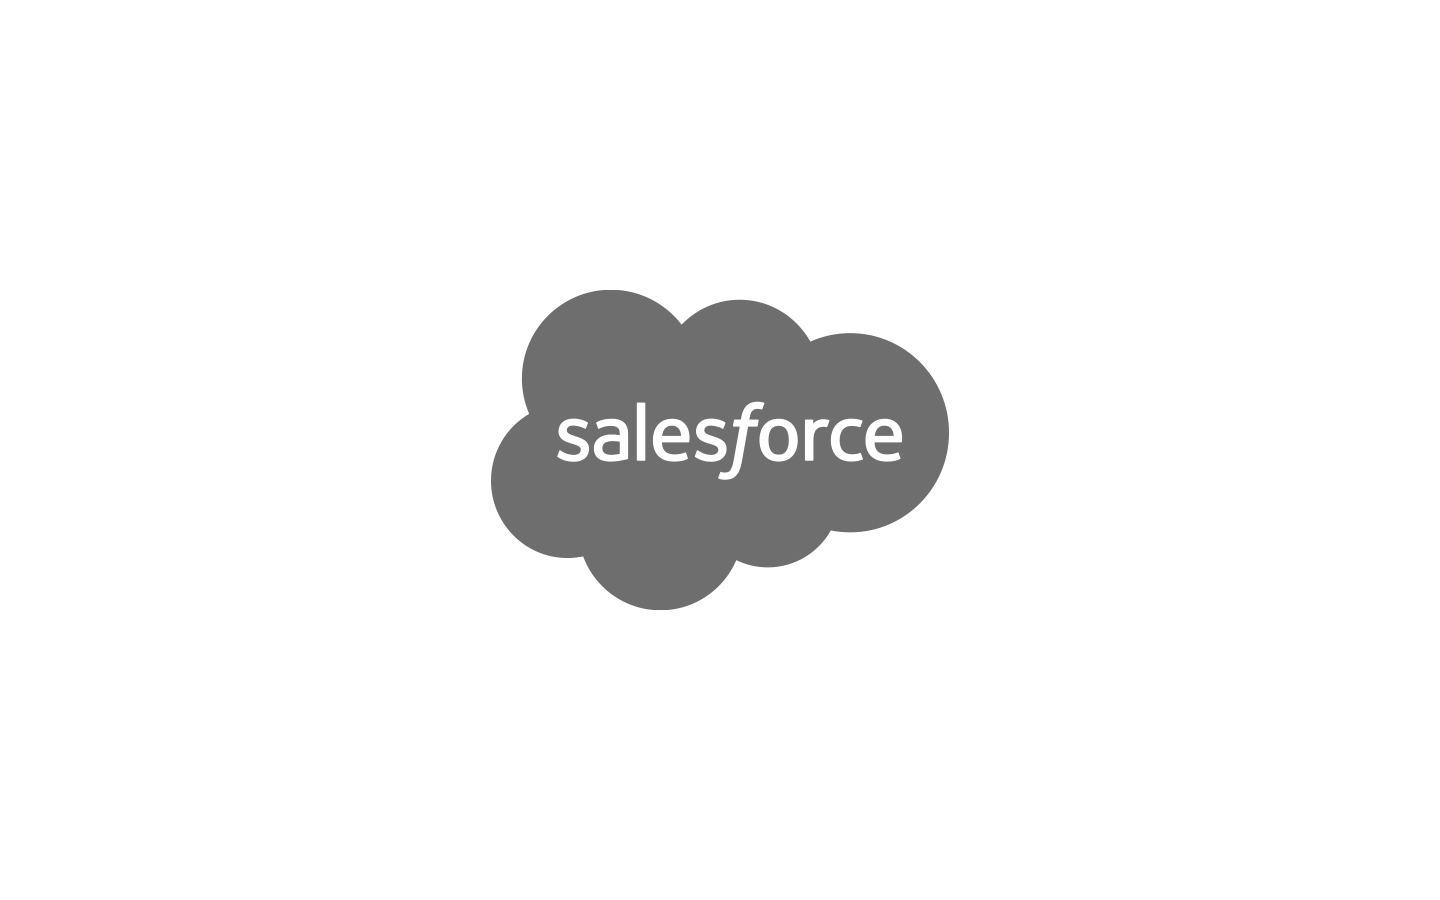 Salesforce.png